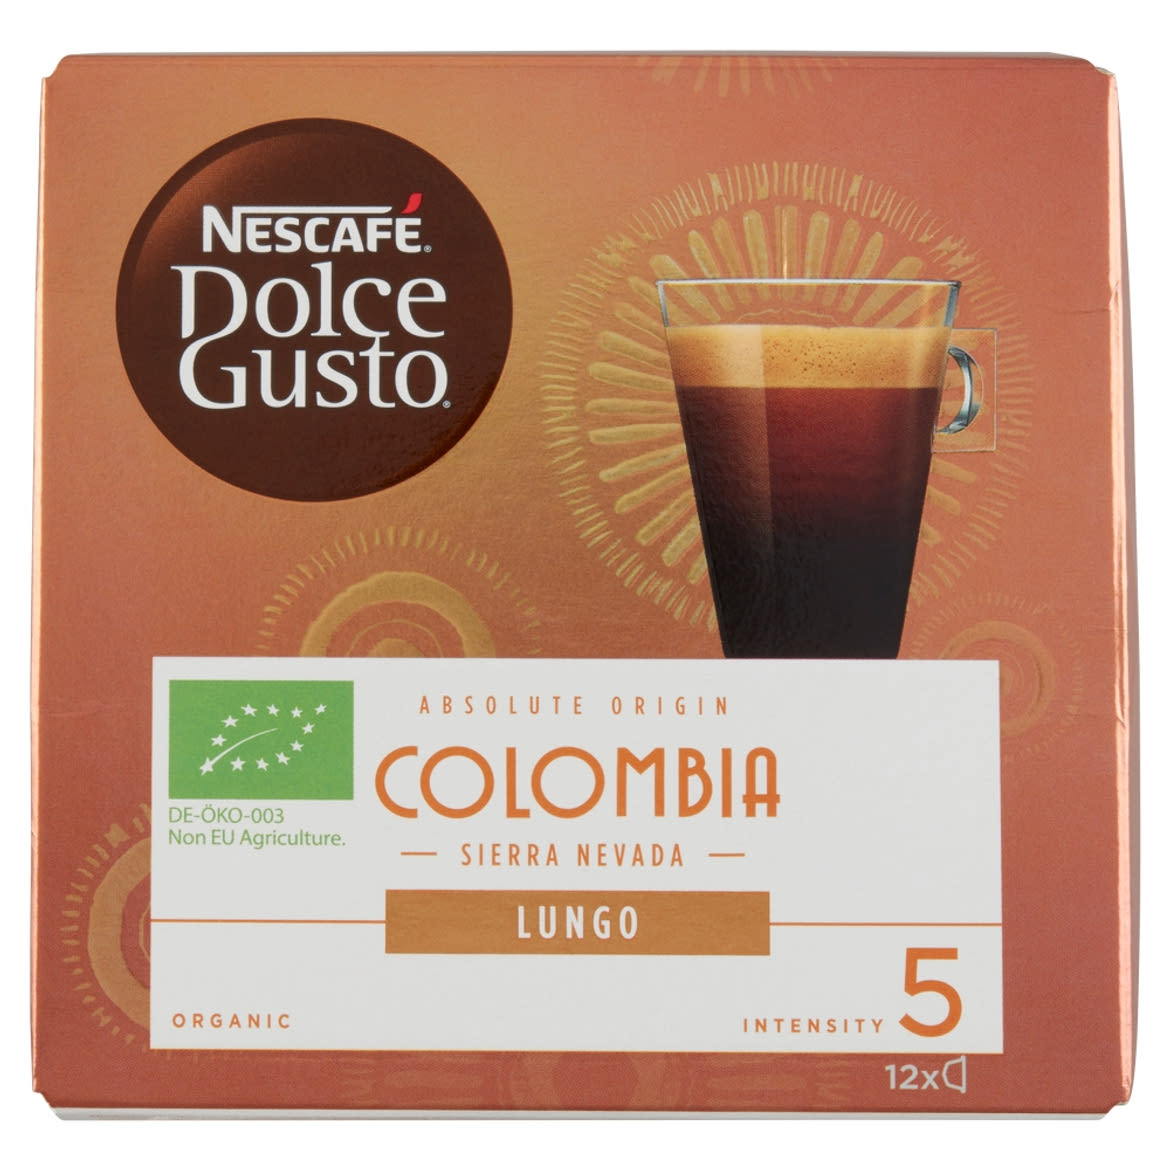 NESCAFÉ Dolce Gusto Colombia Sierra Nevada Lungo kávékapszula